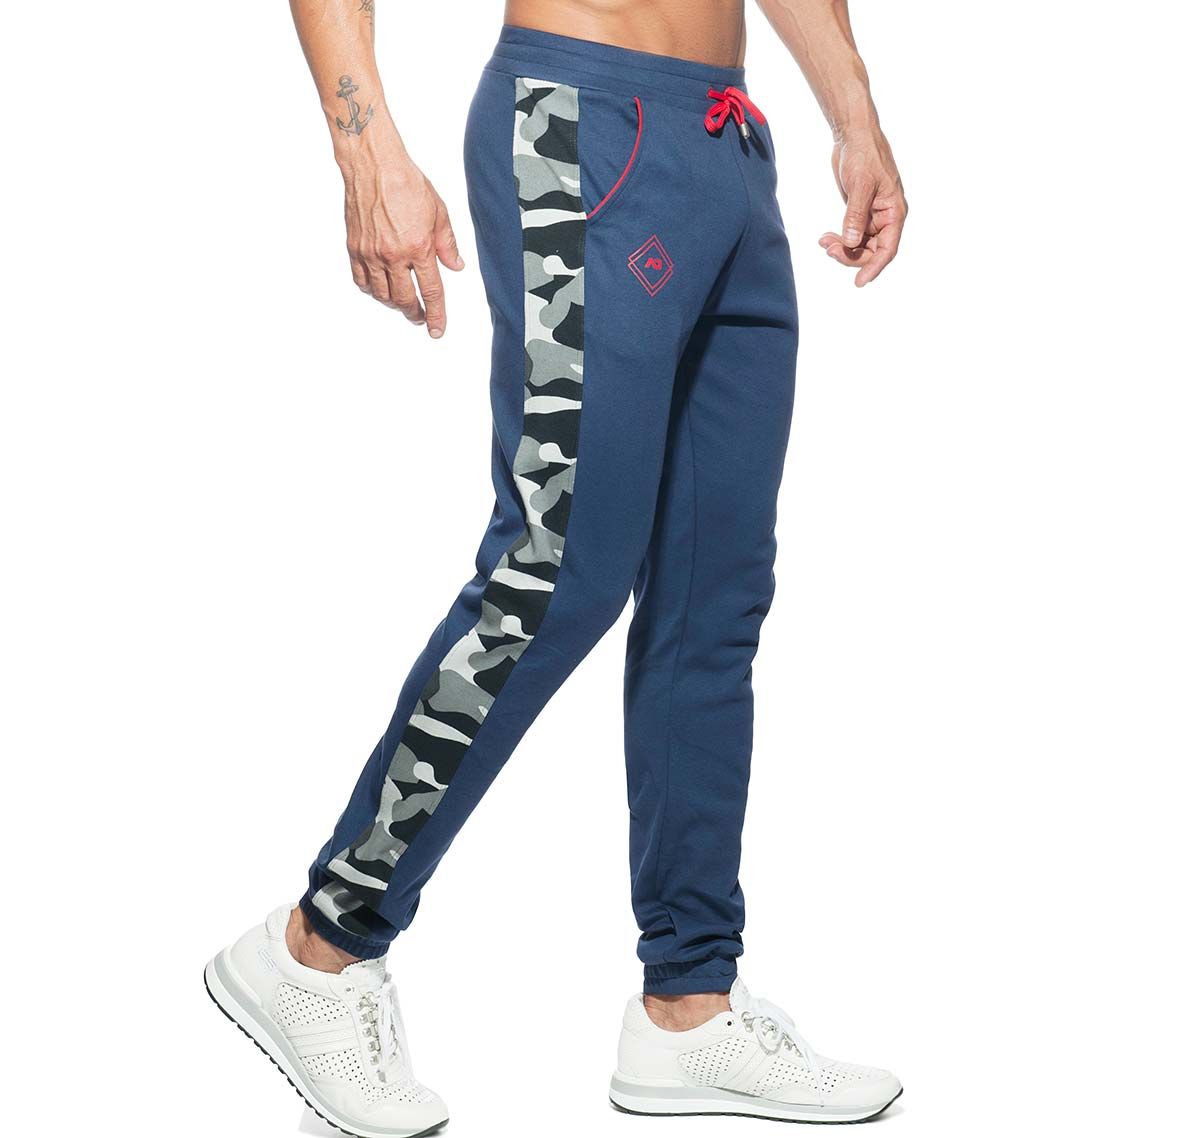 Addicted Pantalón deportivo SPORT CAMO PANT AD661, azul marino